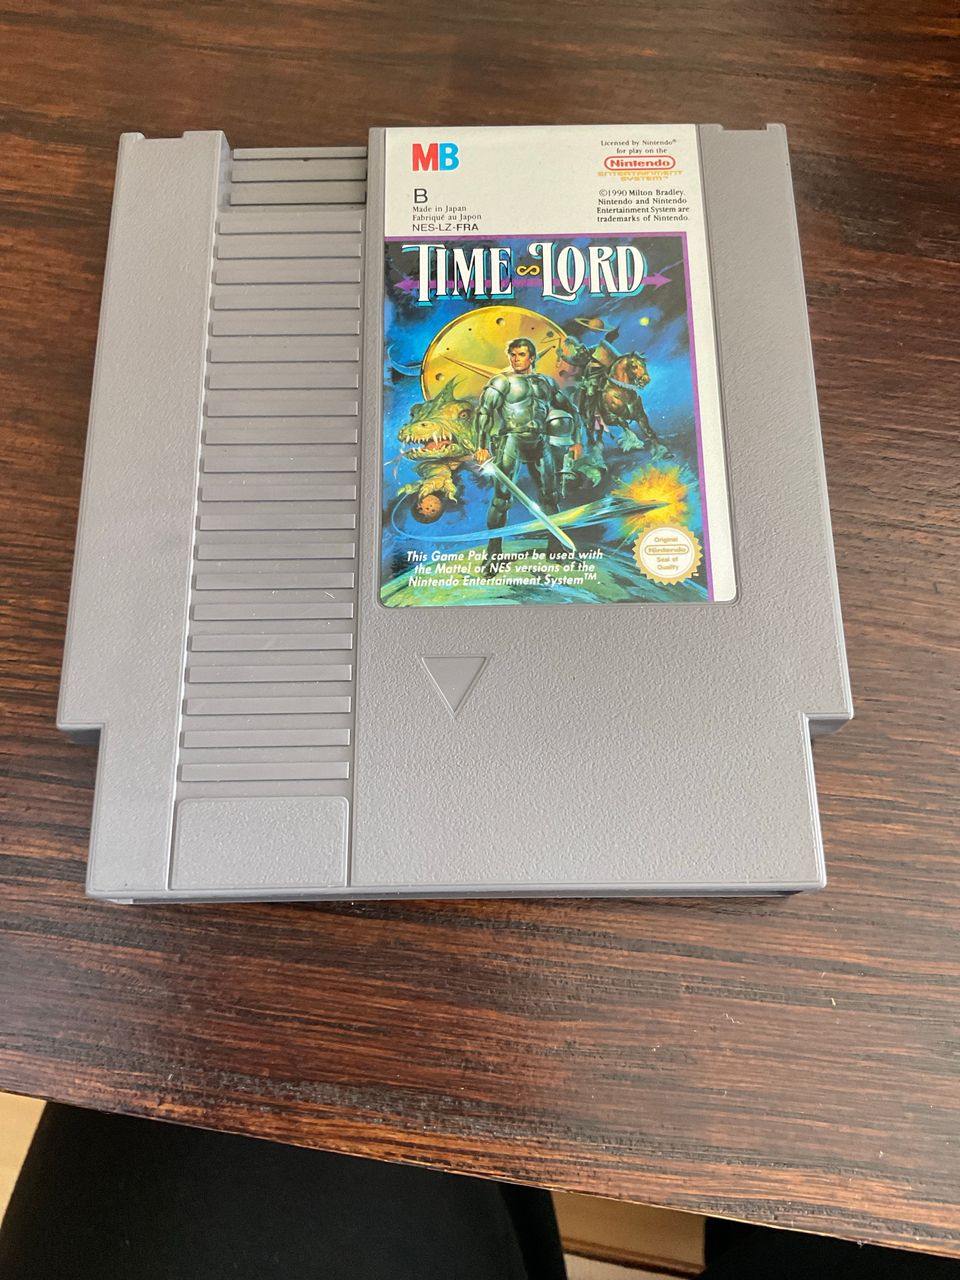 Time lord - NES peli